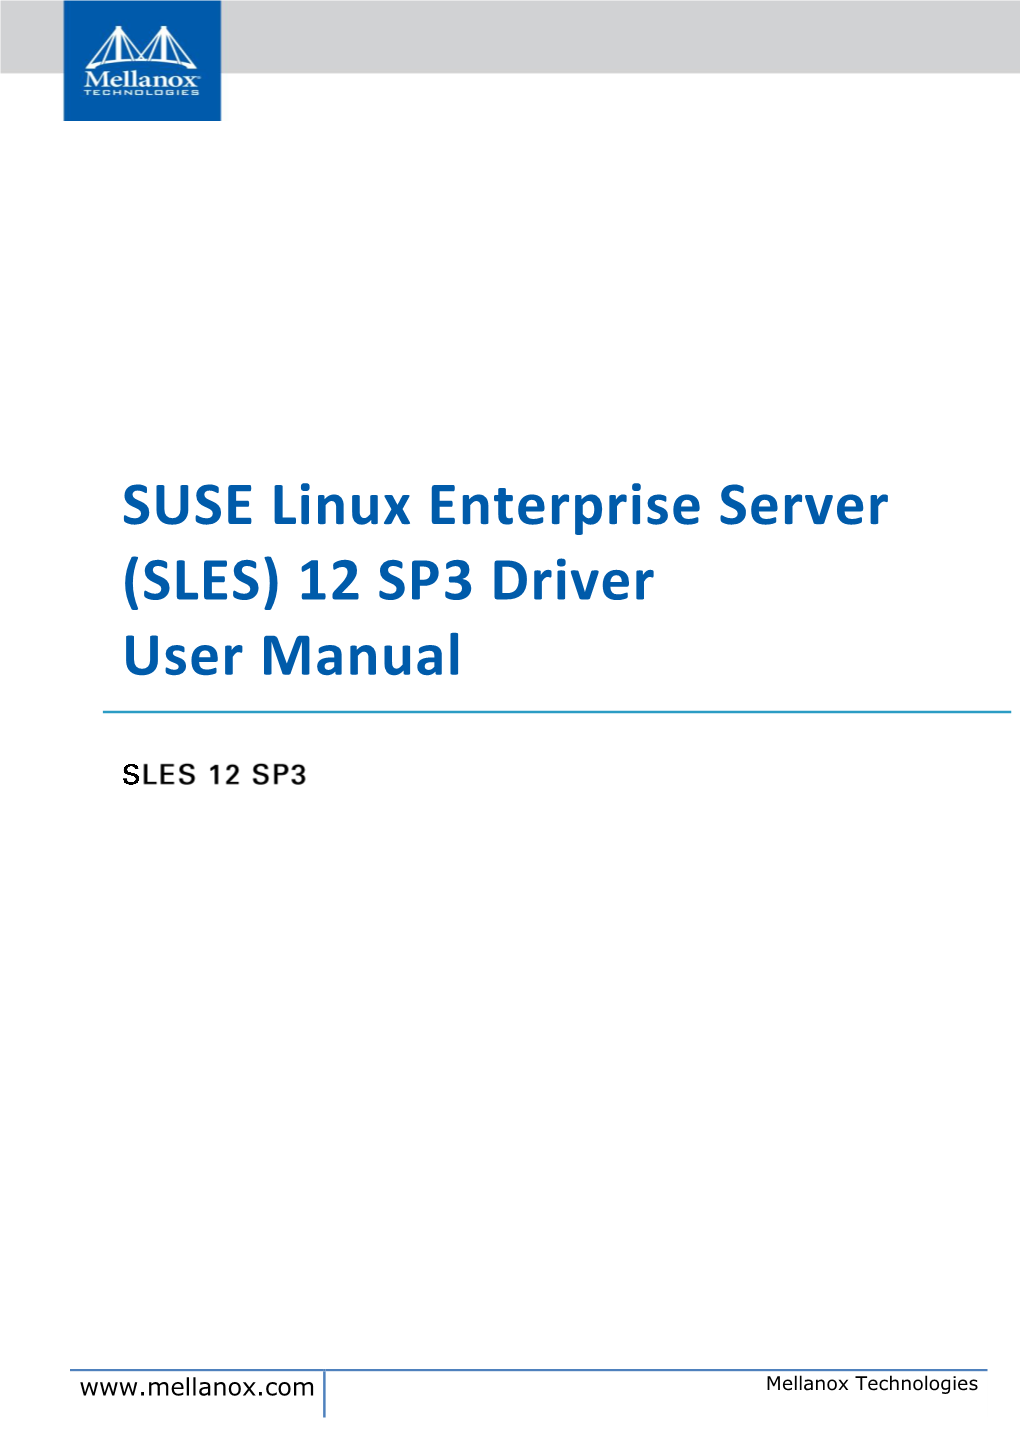 SUSE Linux Enterprise Server (SLES) 12 SP3 Driver User Manual